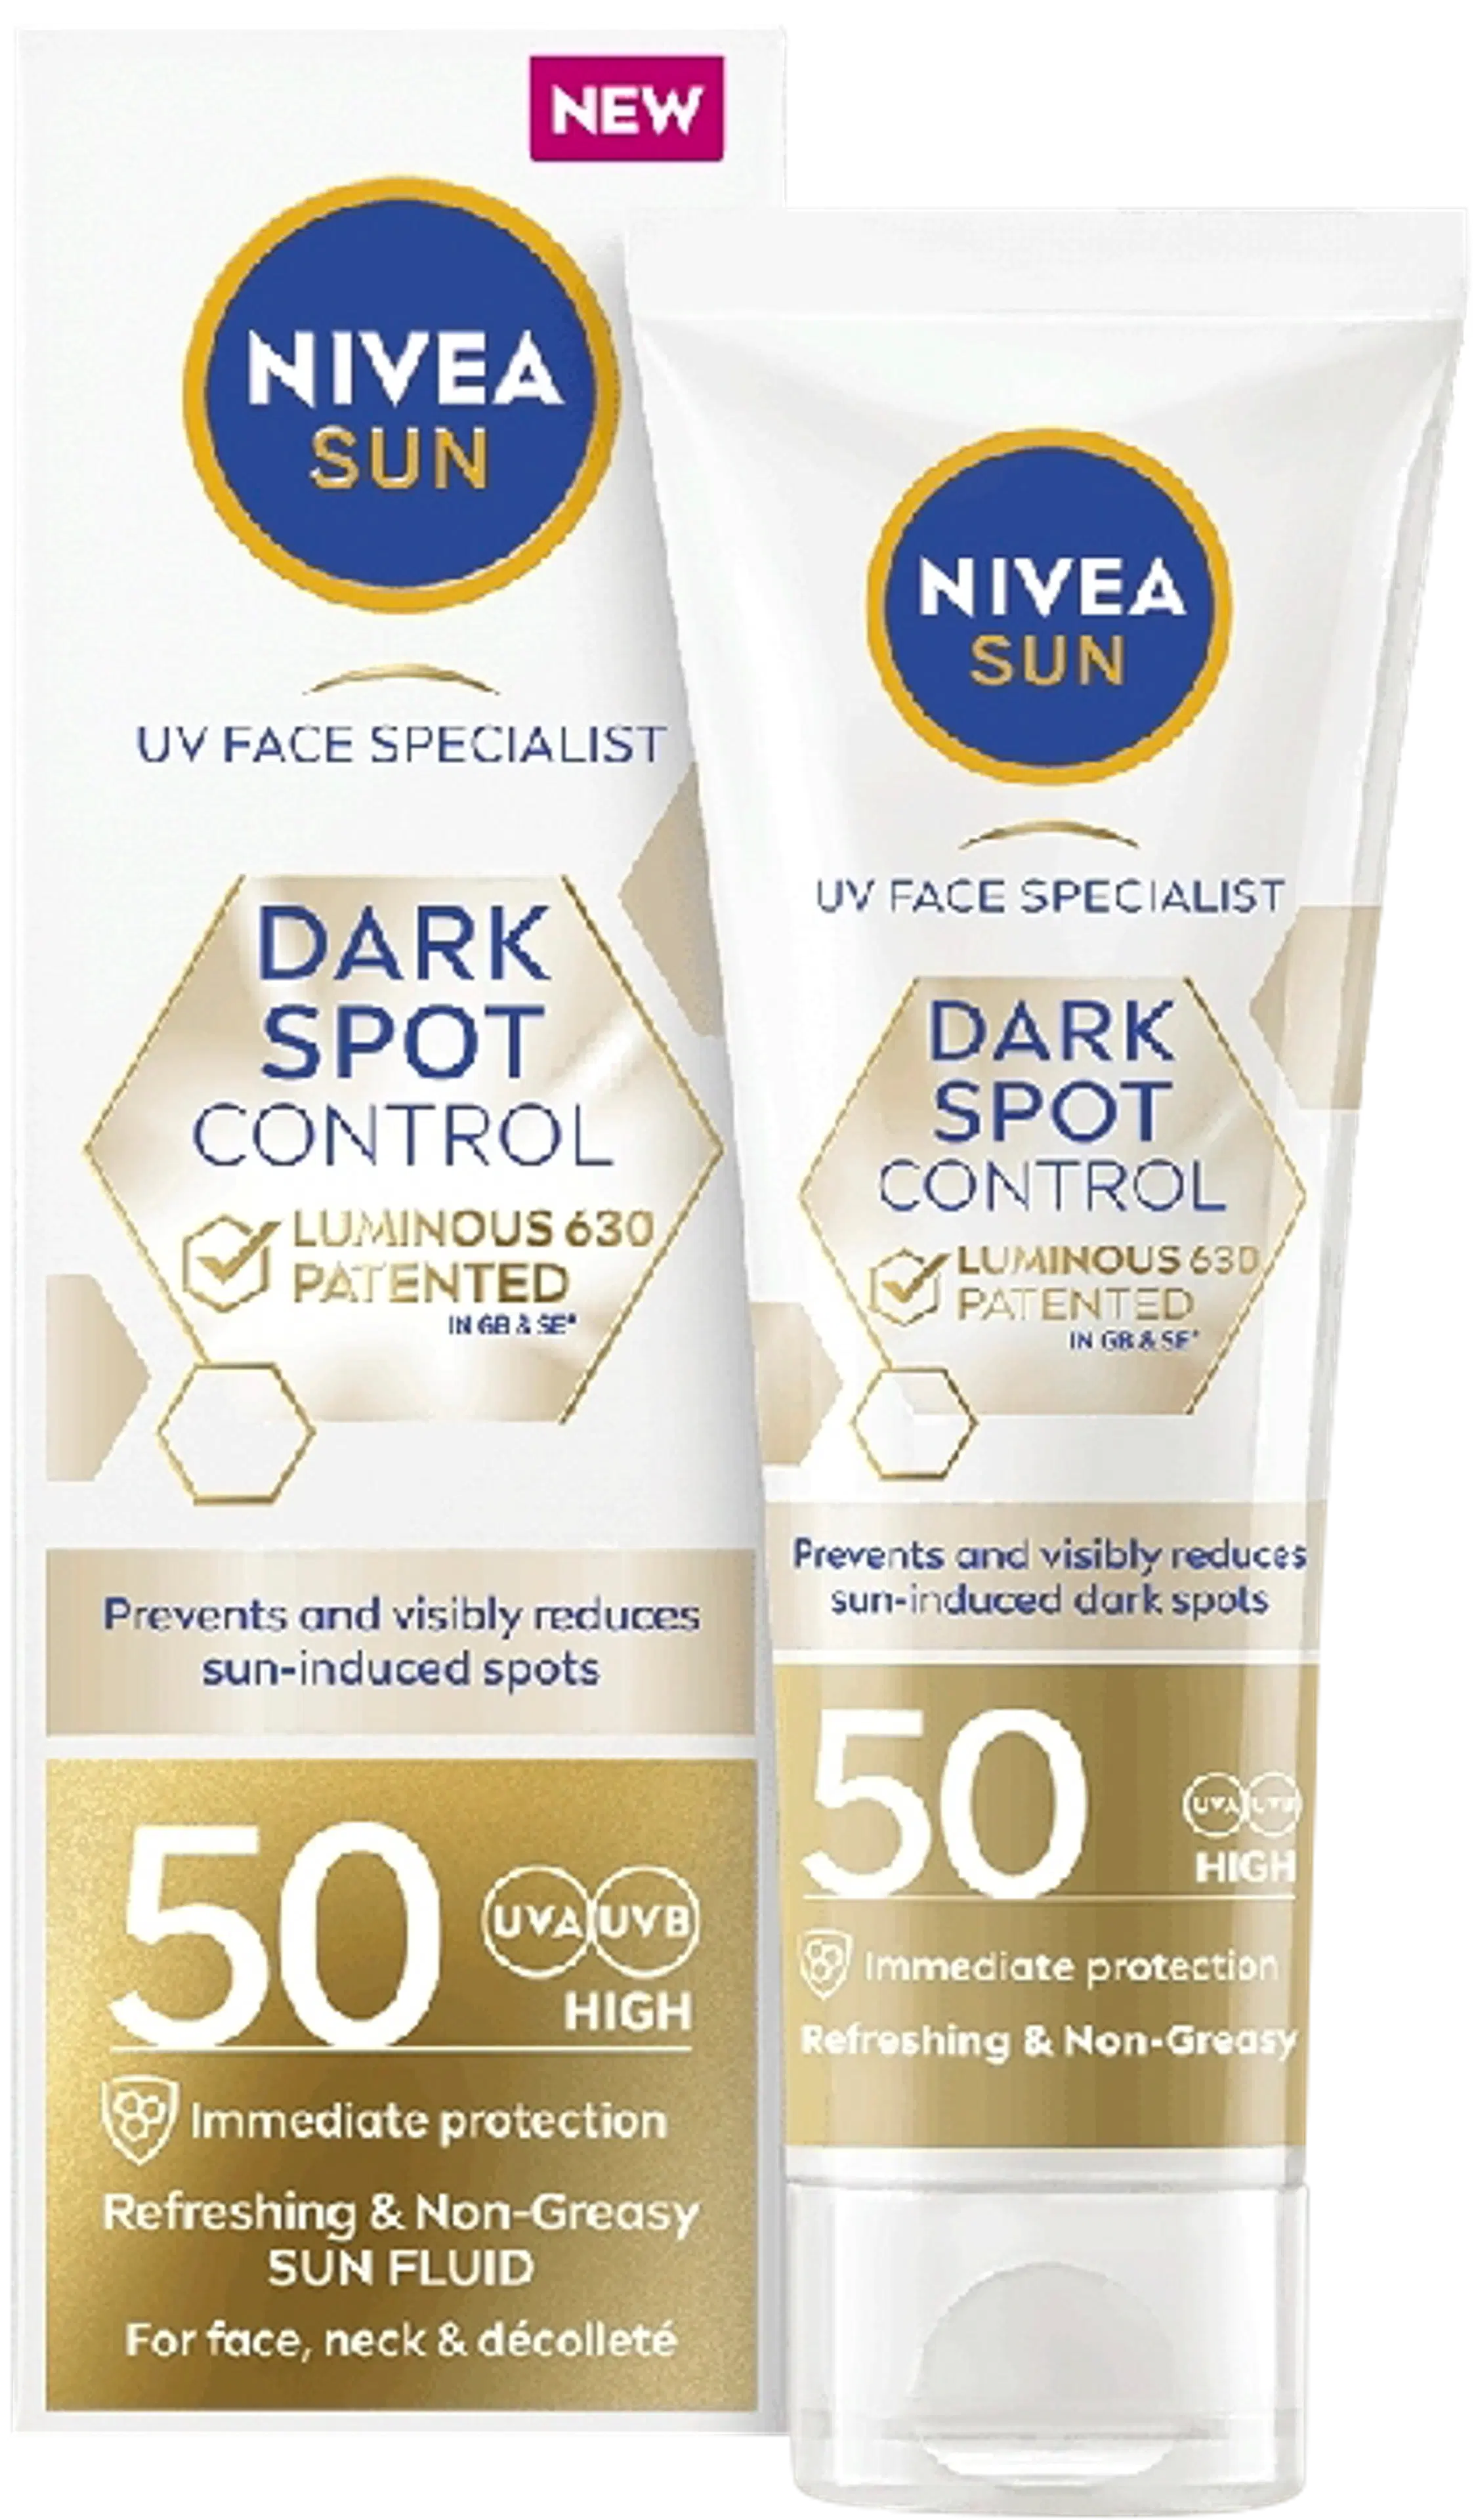 NIVEA SUN 40ml UV Face LUMINOUS630® Spot Control SK50 -aurinkovoide